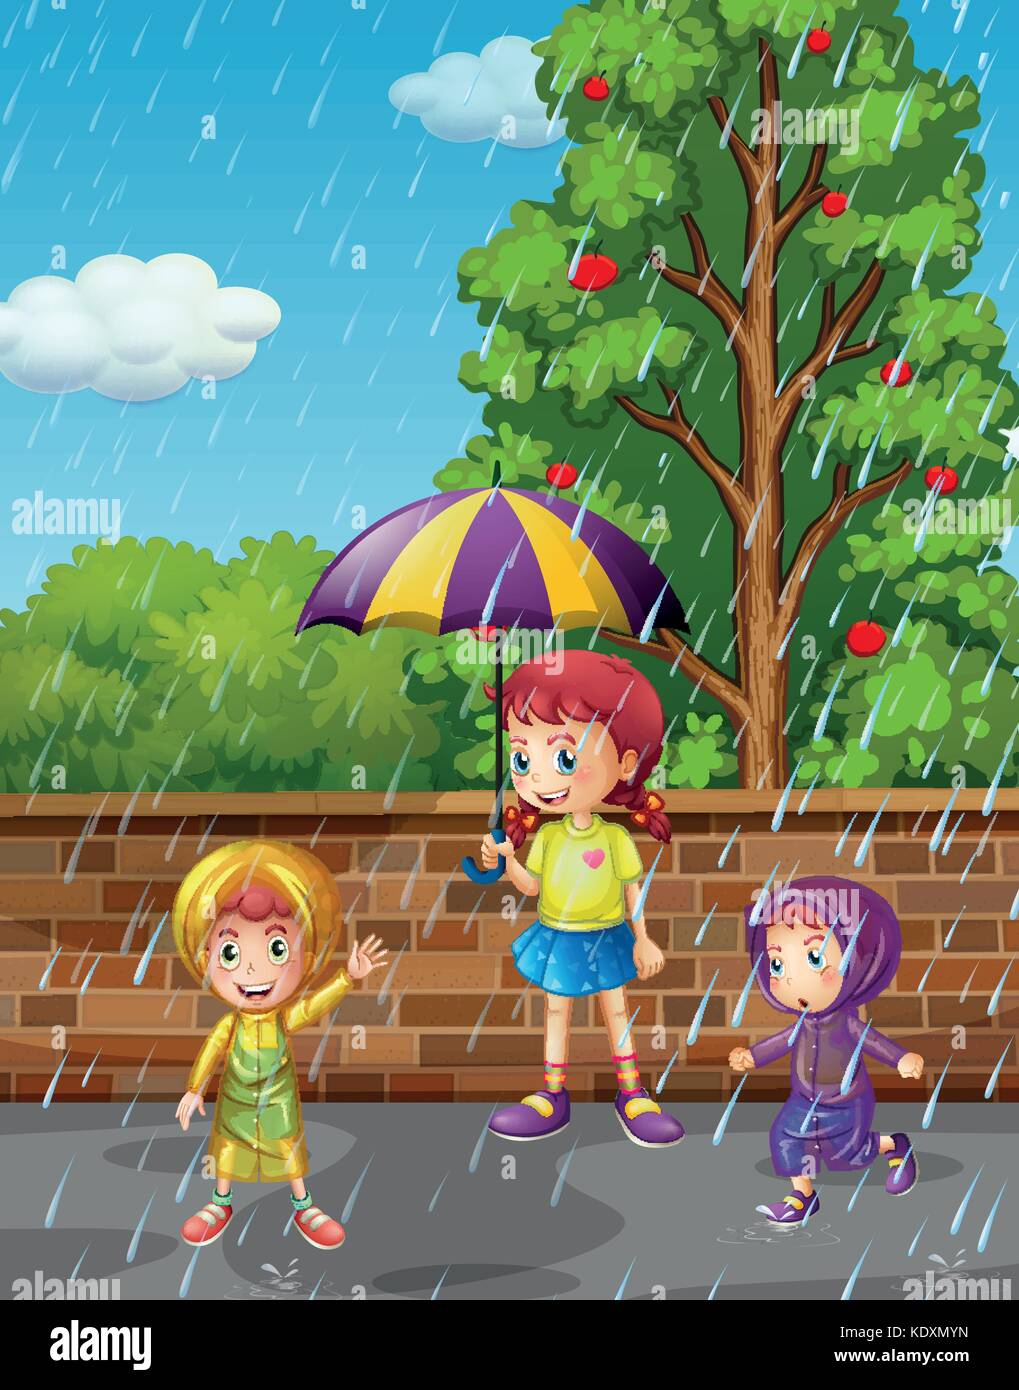 https://c8.alamy.com/comp/KDXMYN/rainy-season-with-three-kids-in-the-rain-illustration-KDXMYN.jpg